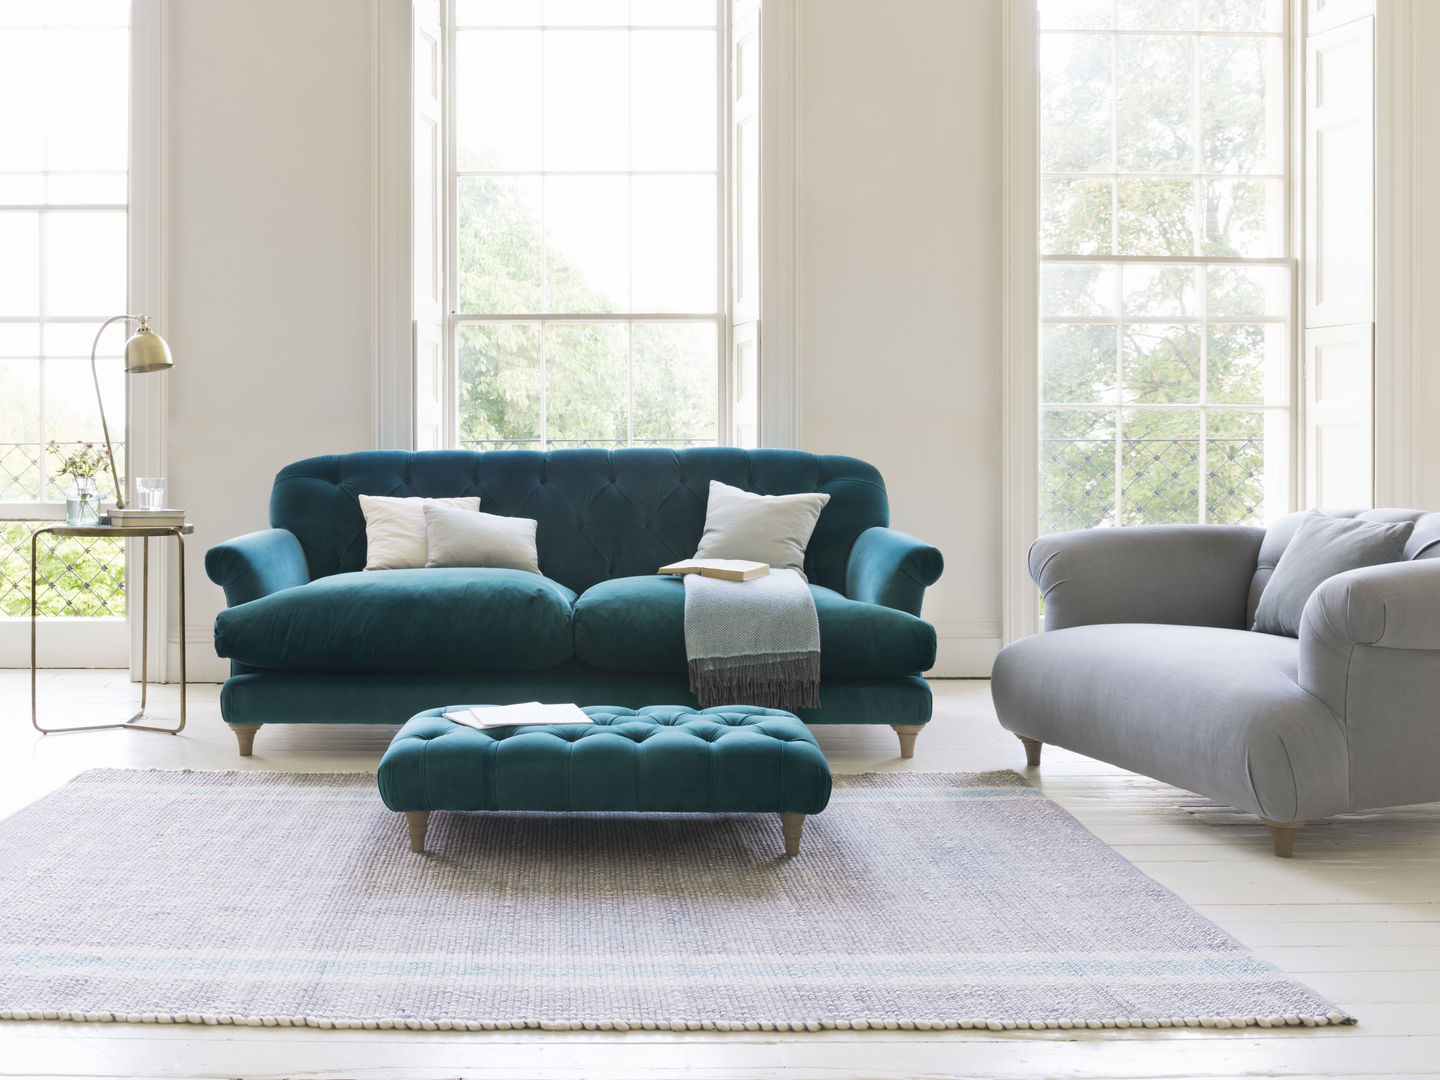 Comfty footstool Loaf Modern Oturma Odası footstool,teal,living room,sofa,space,windows,blue,velvet,green